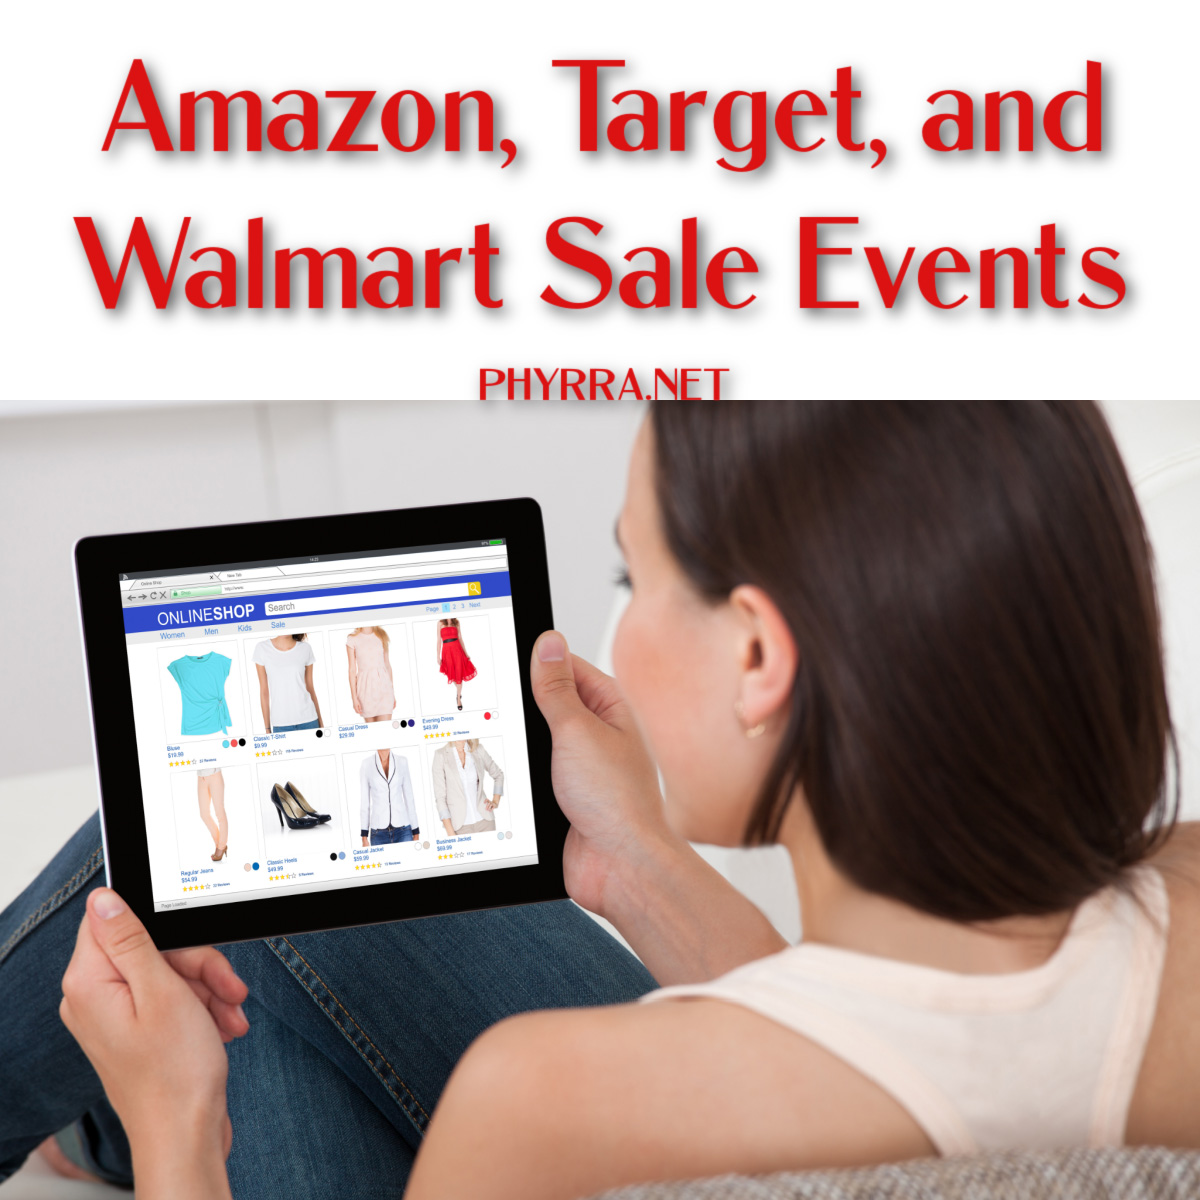 Amazon, Target, and Walmart Sale Events